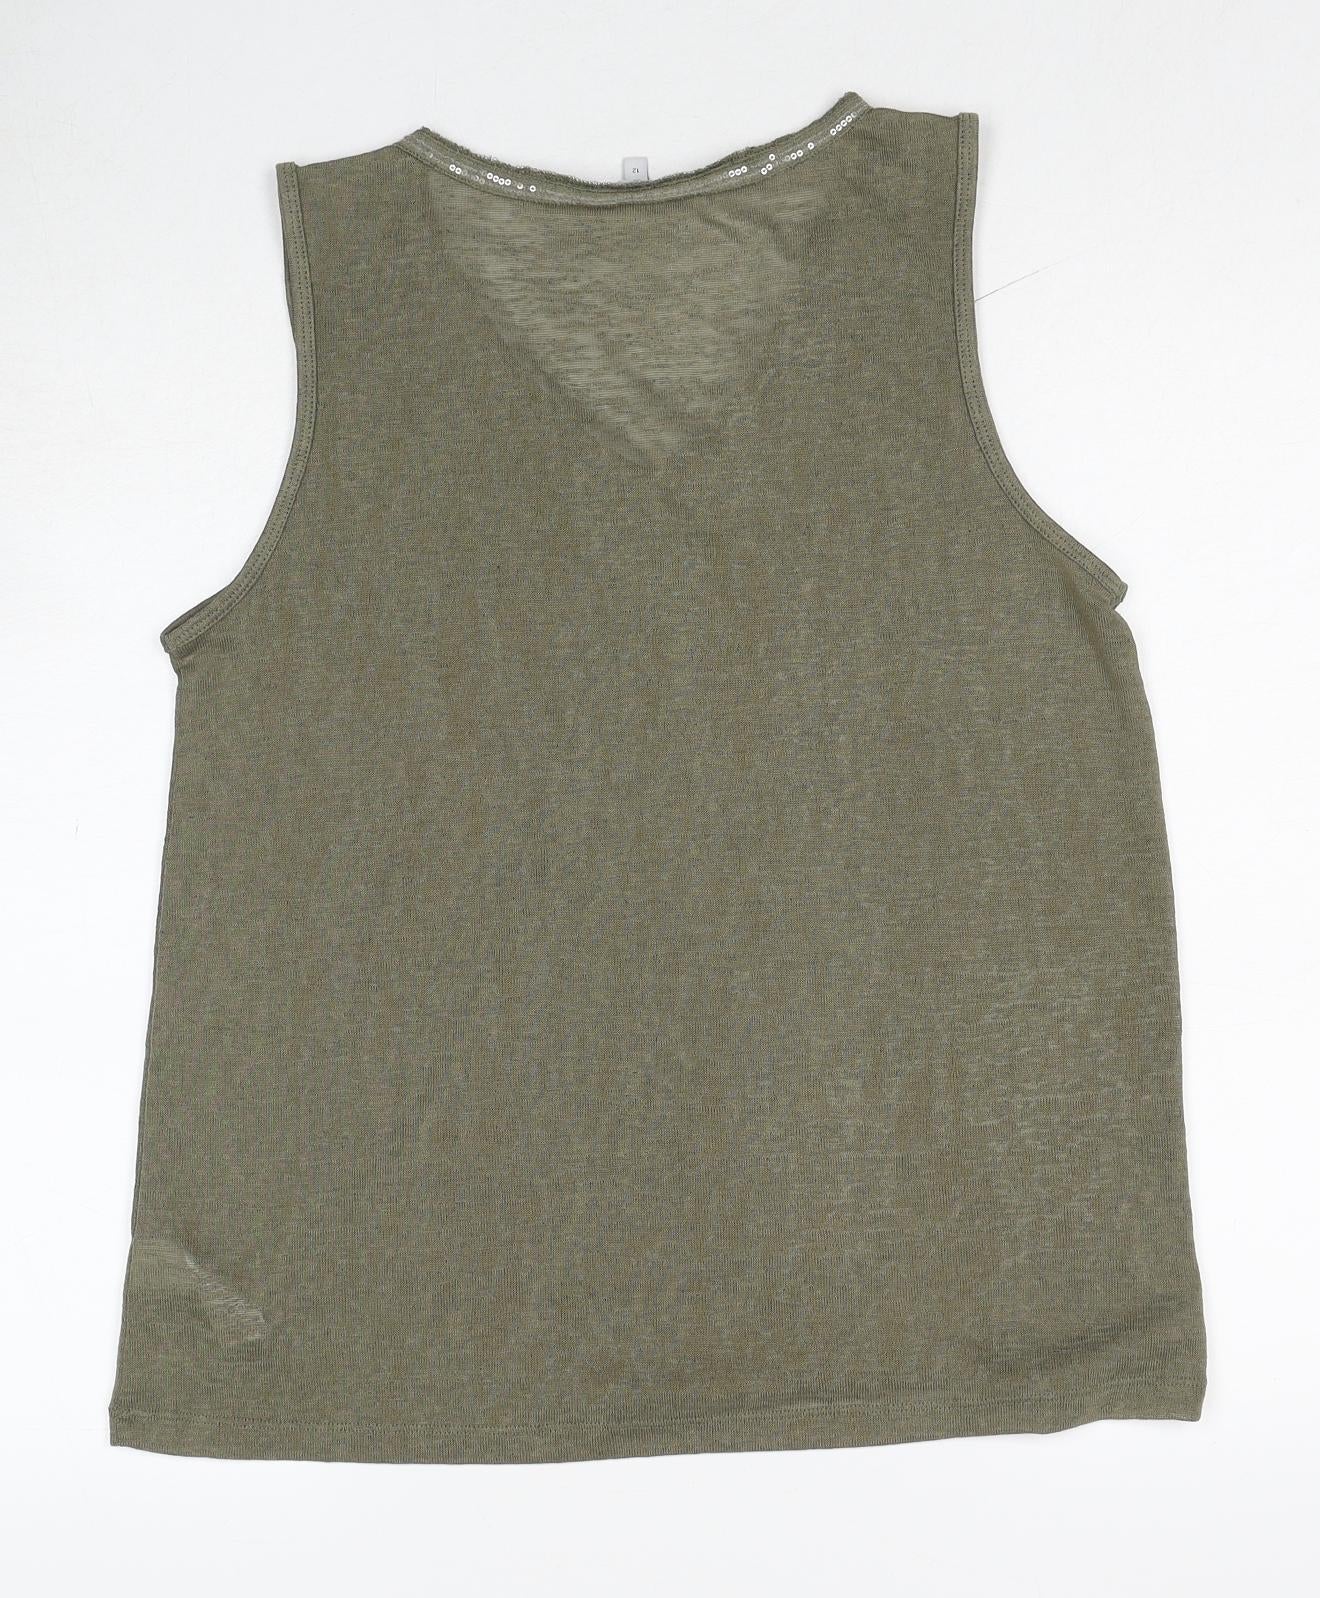 NEXT Womens Green Polyester Basic Tank Size 12 V-Neck